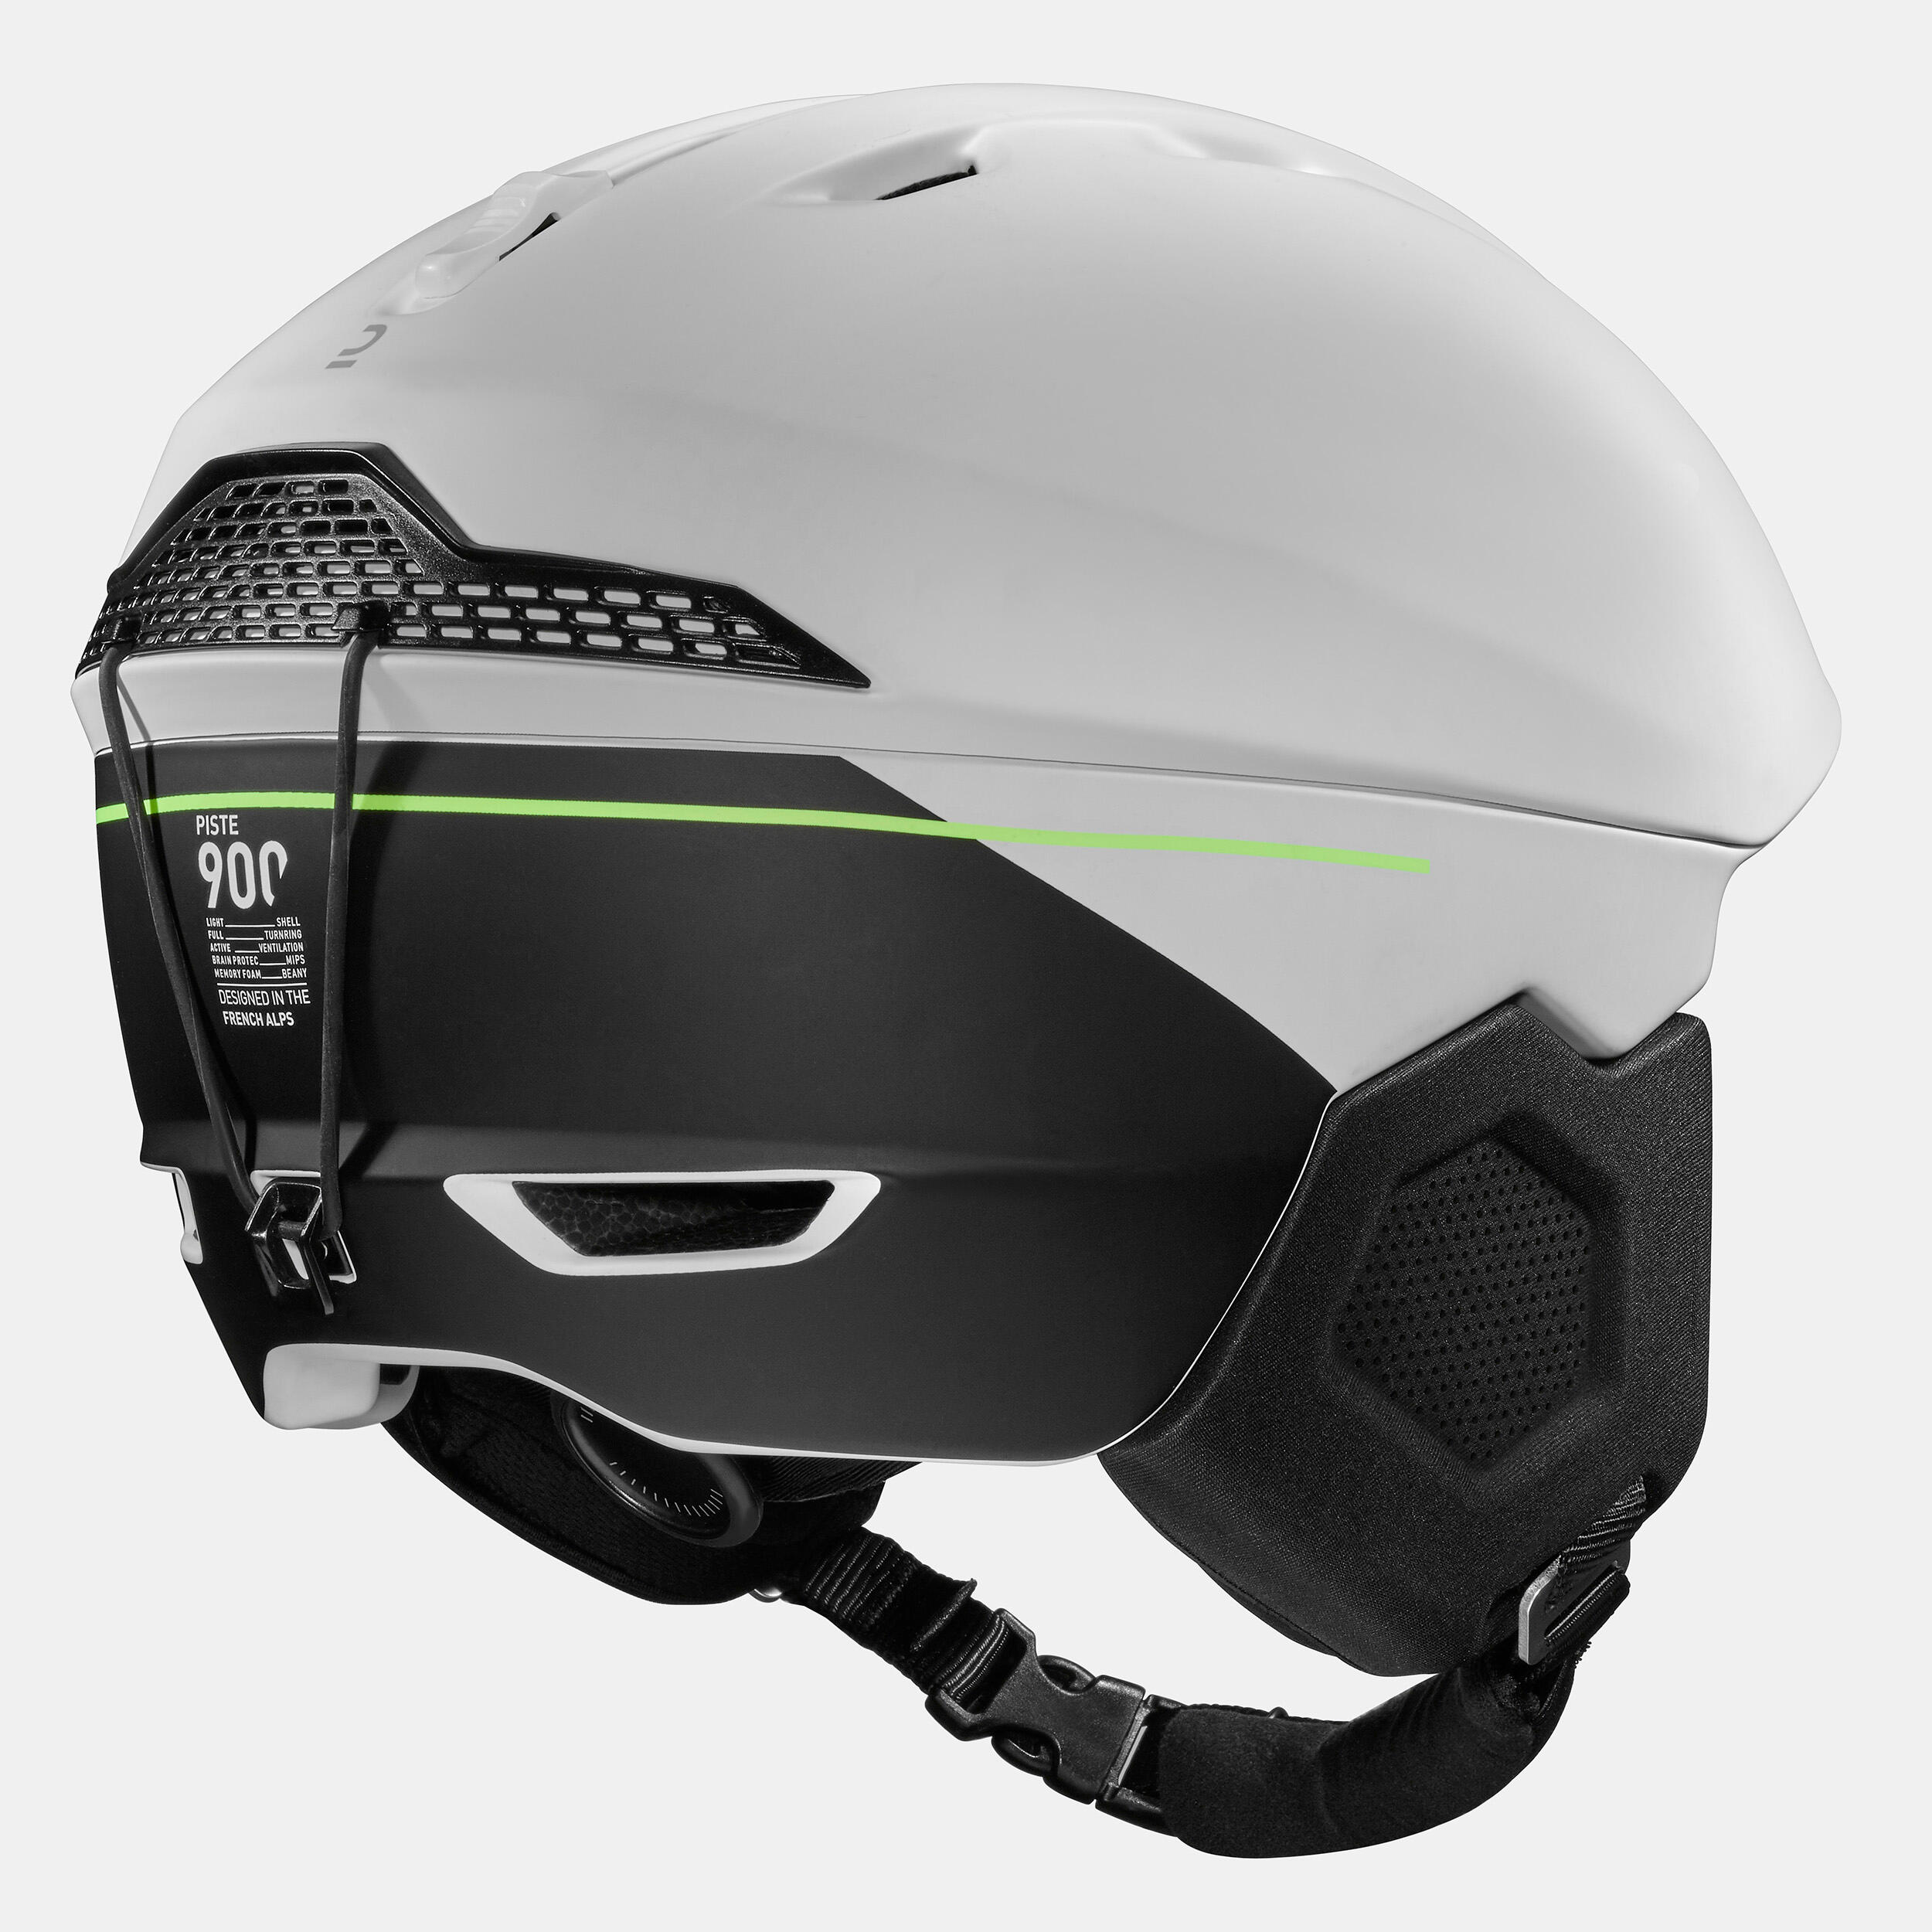 Adult ski helmet - PST 900 MIPS - white and black 6/12